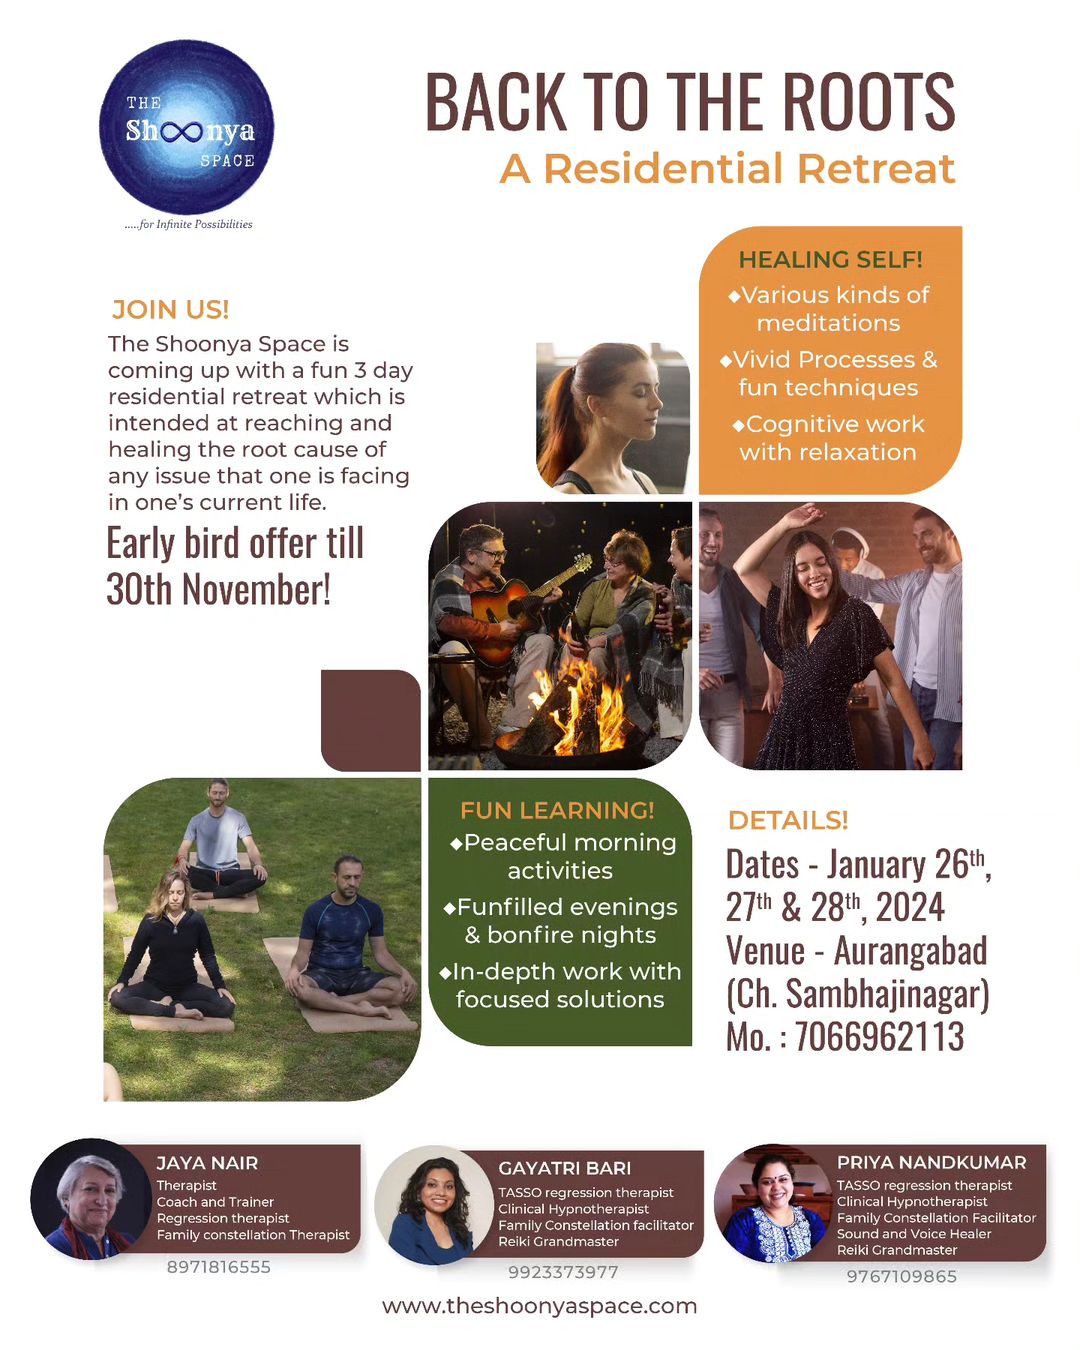 Back to the Roots retreat, Pune retreat, personal growth retreat, self-discovery retreat, healing retreat, yoga retreat, meditation retreat, mindfulness retreat, spirituality retreat, alternative healing, break free from patterns, inner peace